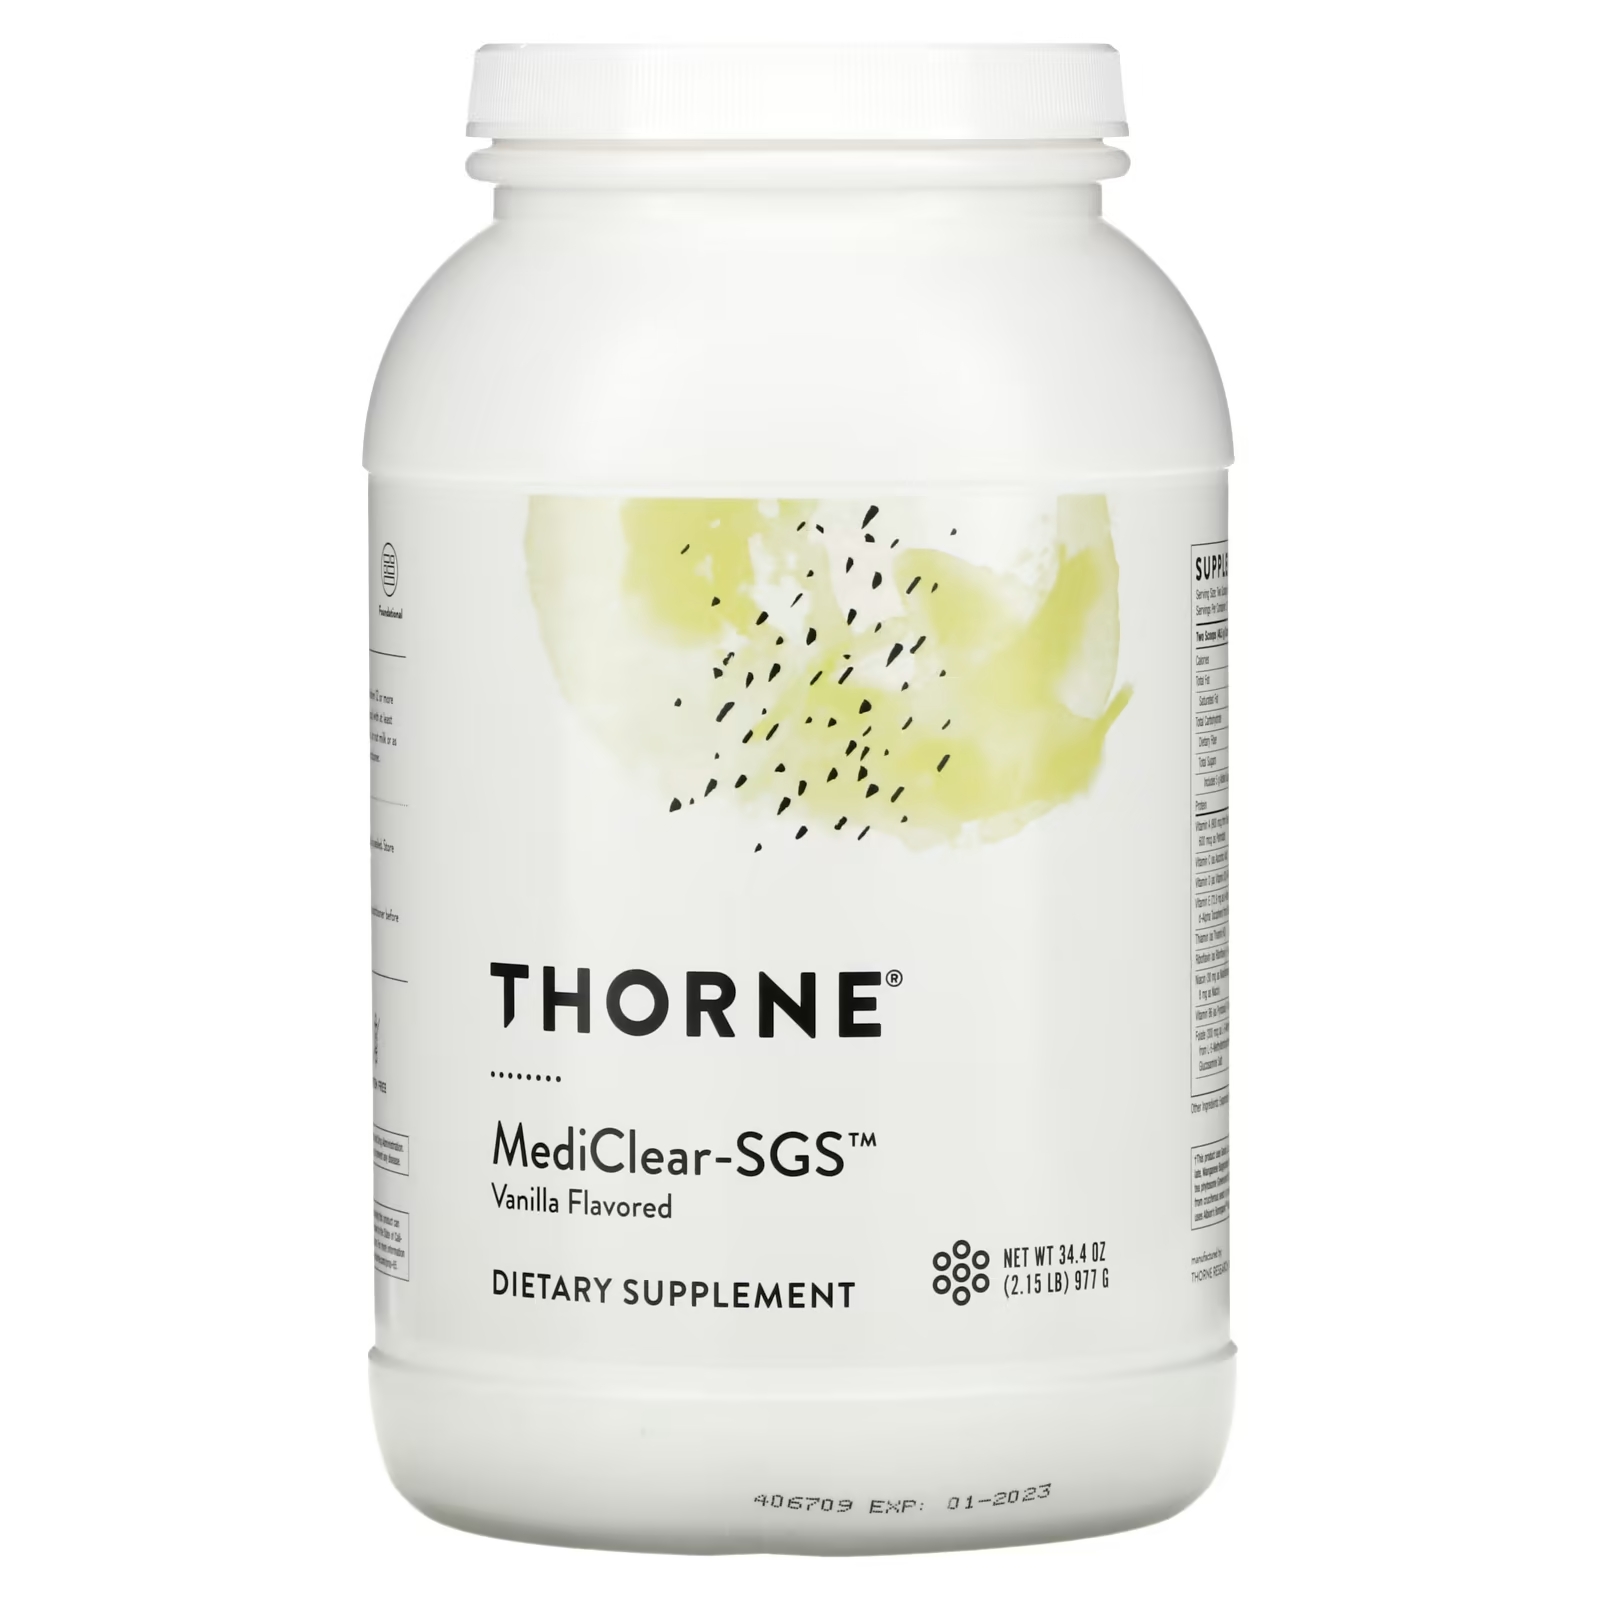 Пищевая Добавка Thorne Research MediClear-SGS с ванильным вкусом, 977 г collagen fit добавка с коллагеном thorne research 506 г